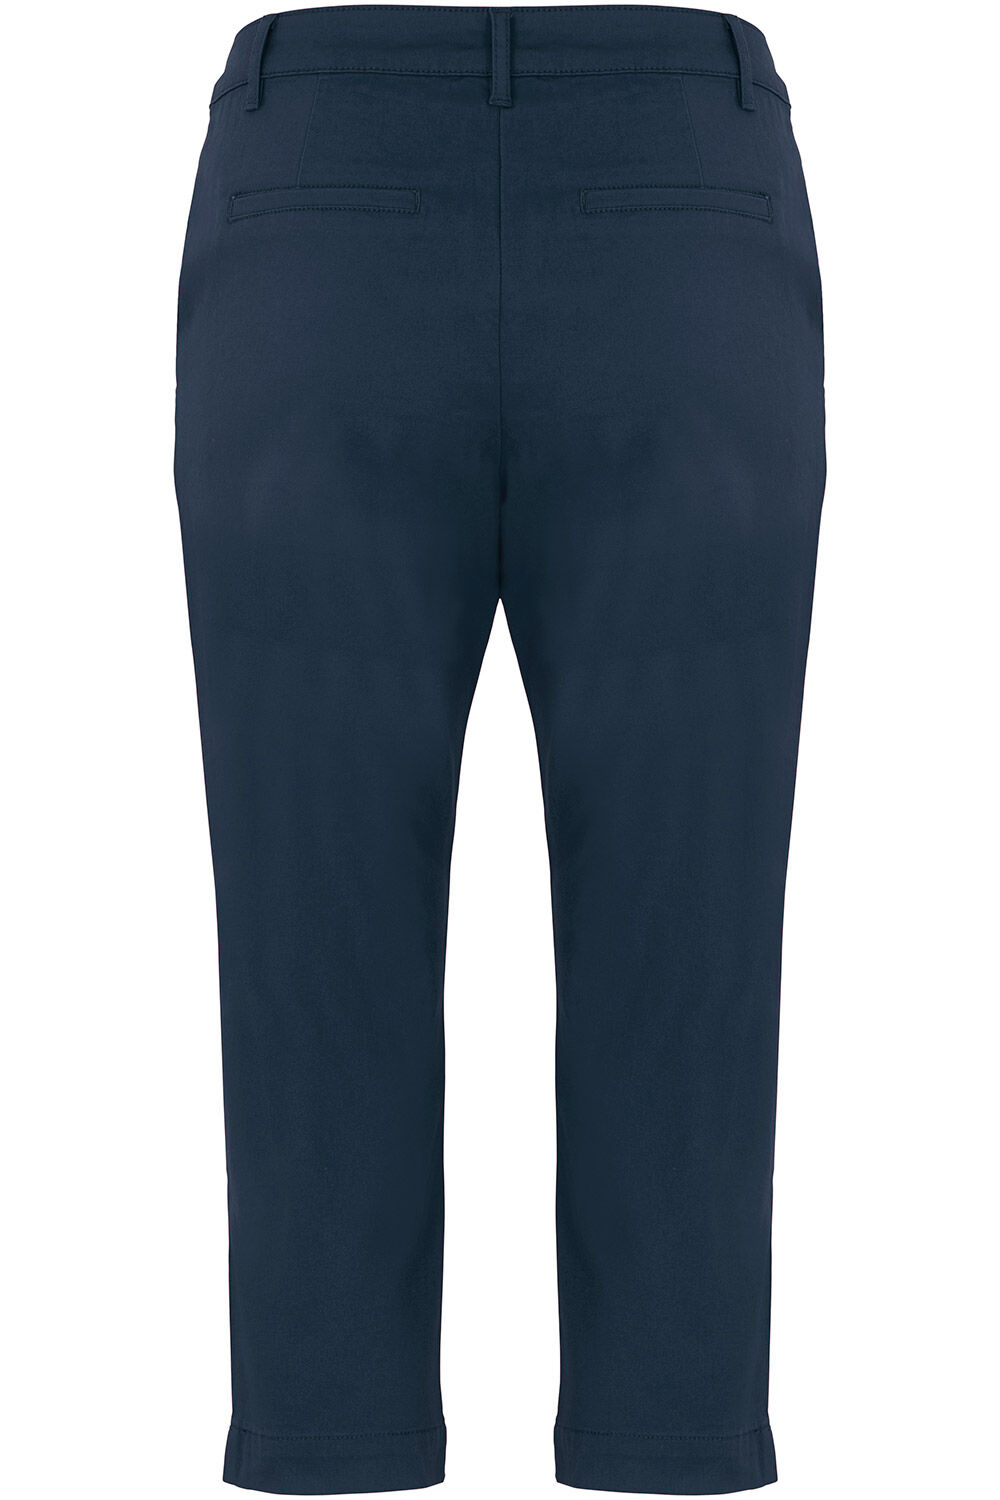 Shop Wardrobe Navy BootCut HighWaist Trousers Online  Westside